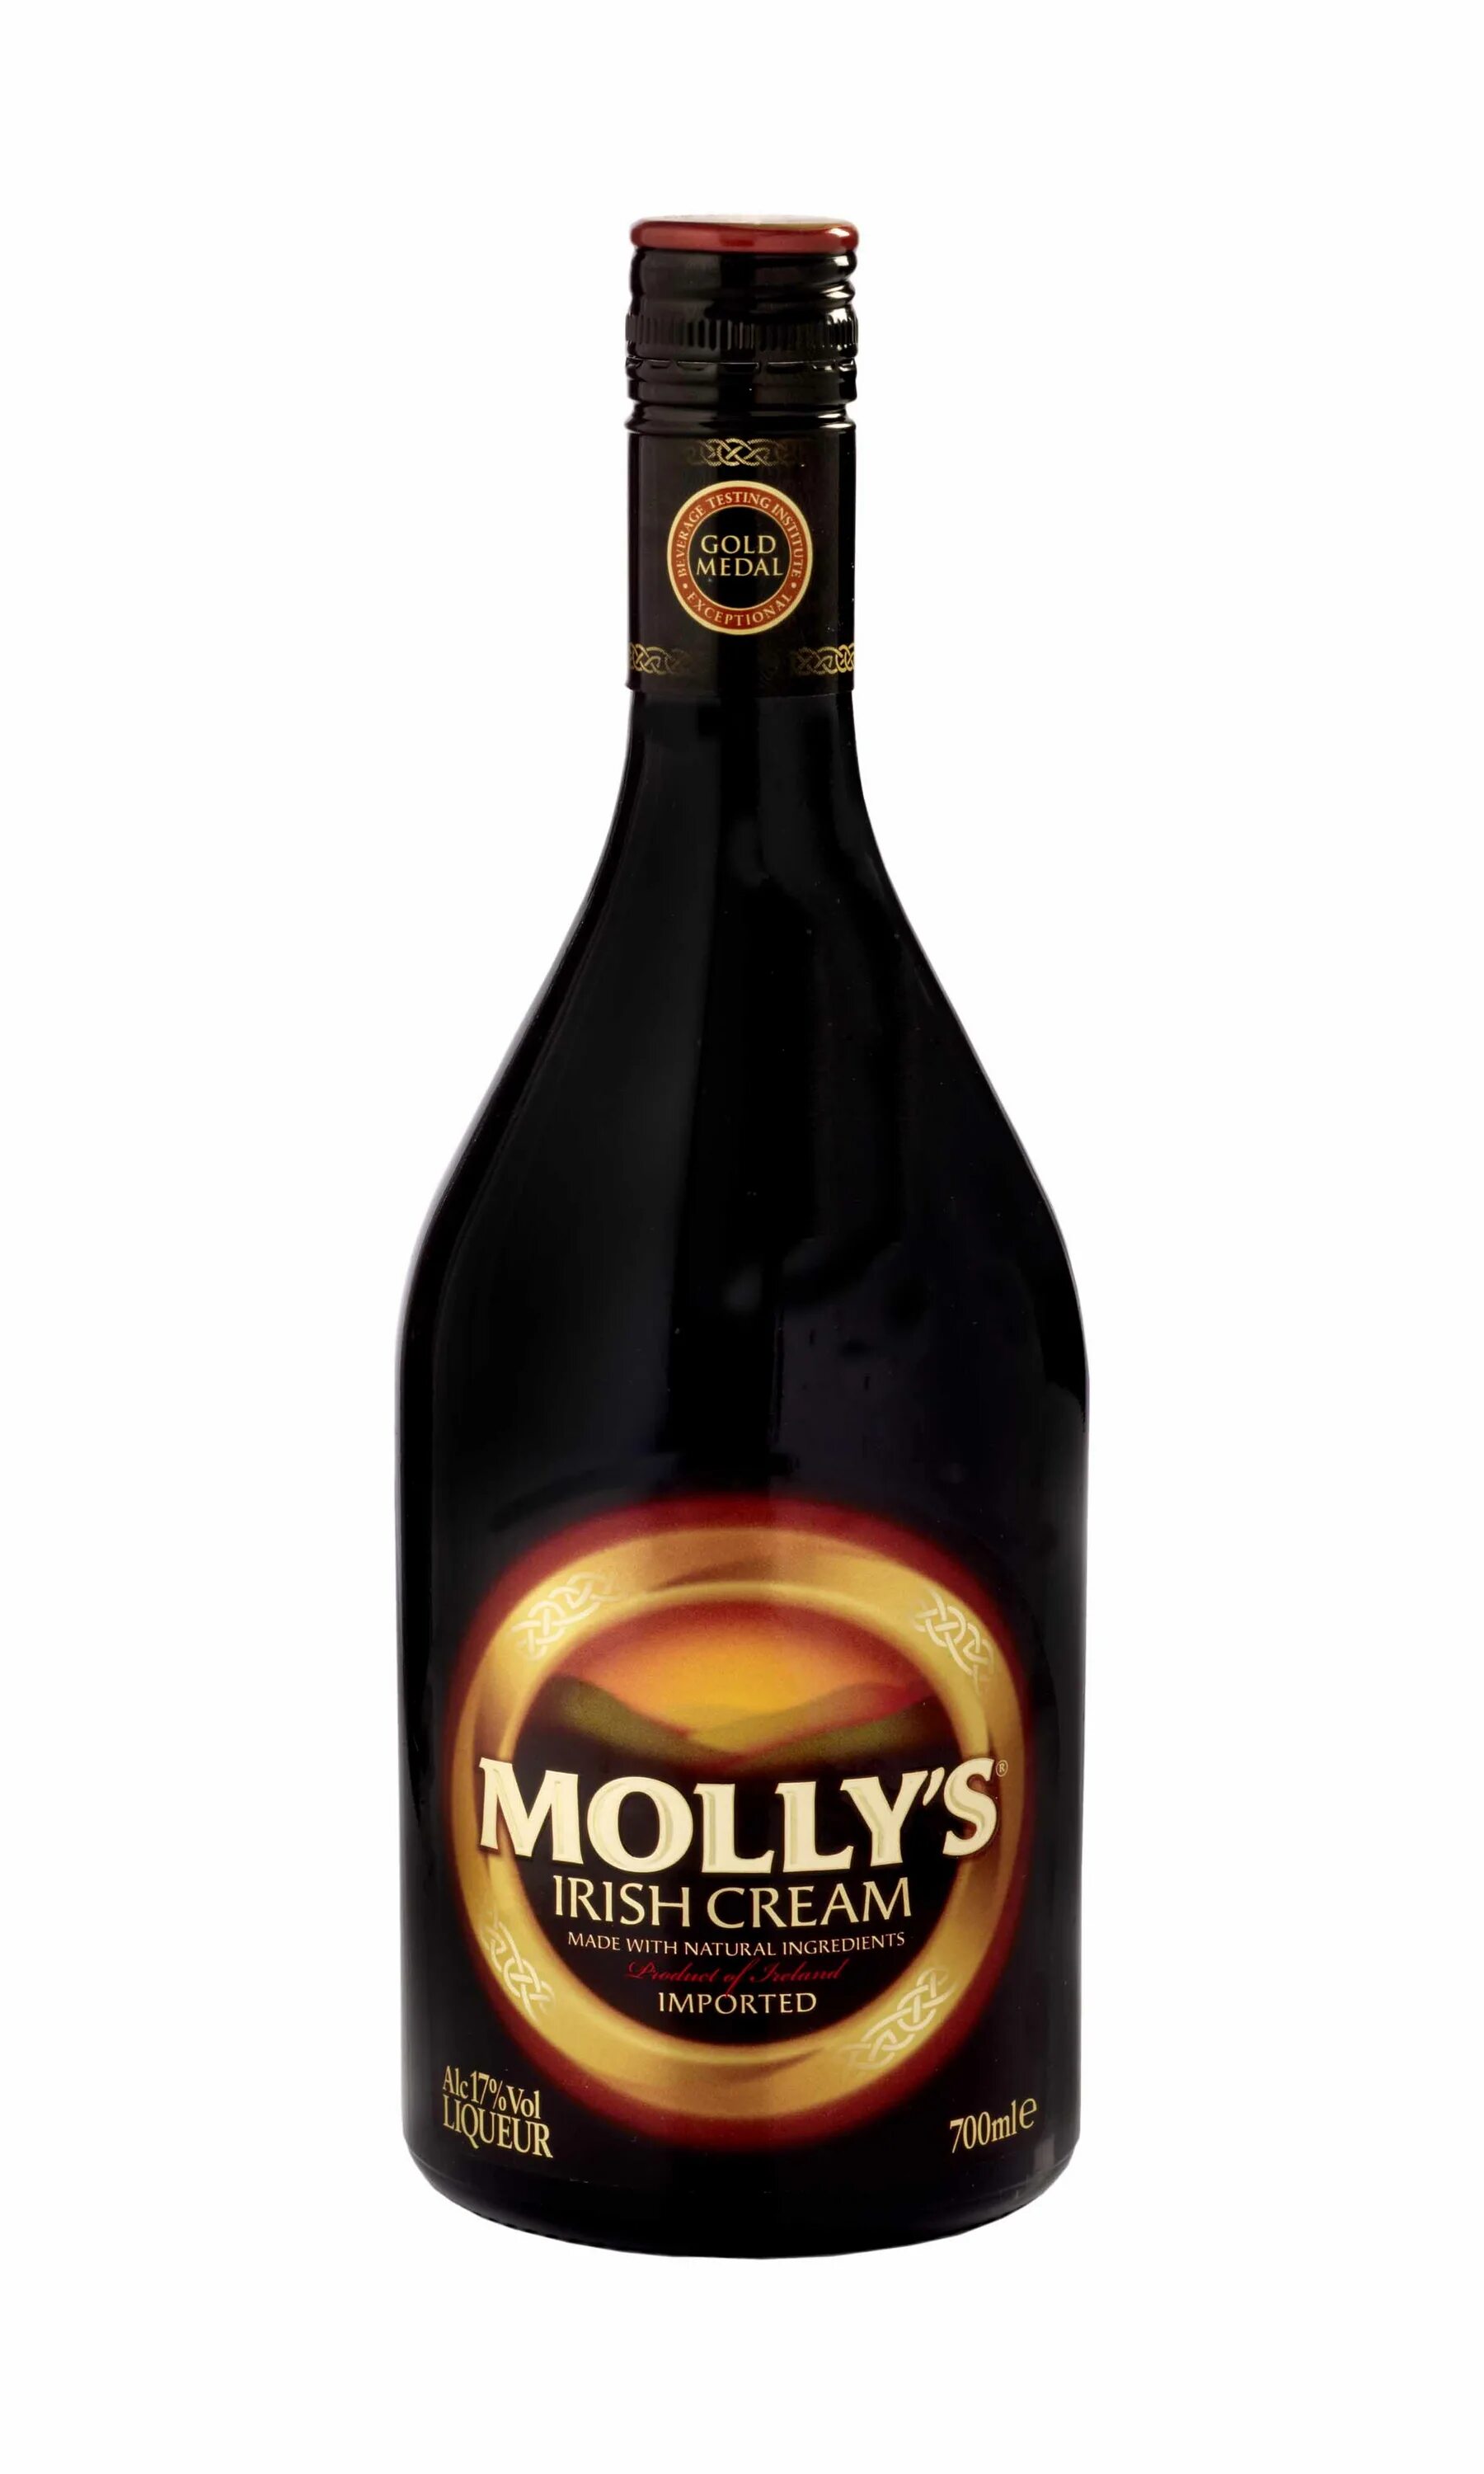 Ликер Моллис Айриш. Ириш крем ликер. Ликер Molly's Irish Cream. Molly's Irish Cream 750ml. Сливочный ликер отзывы